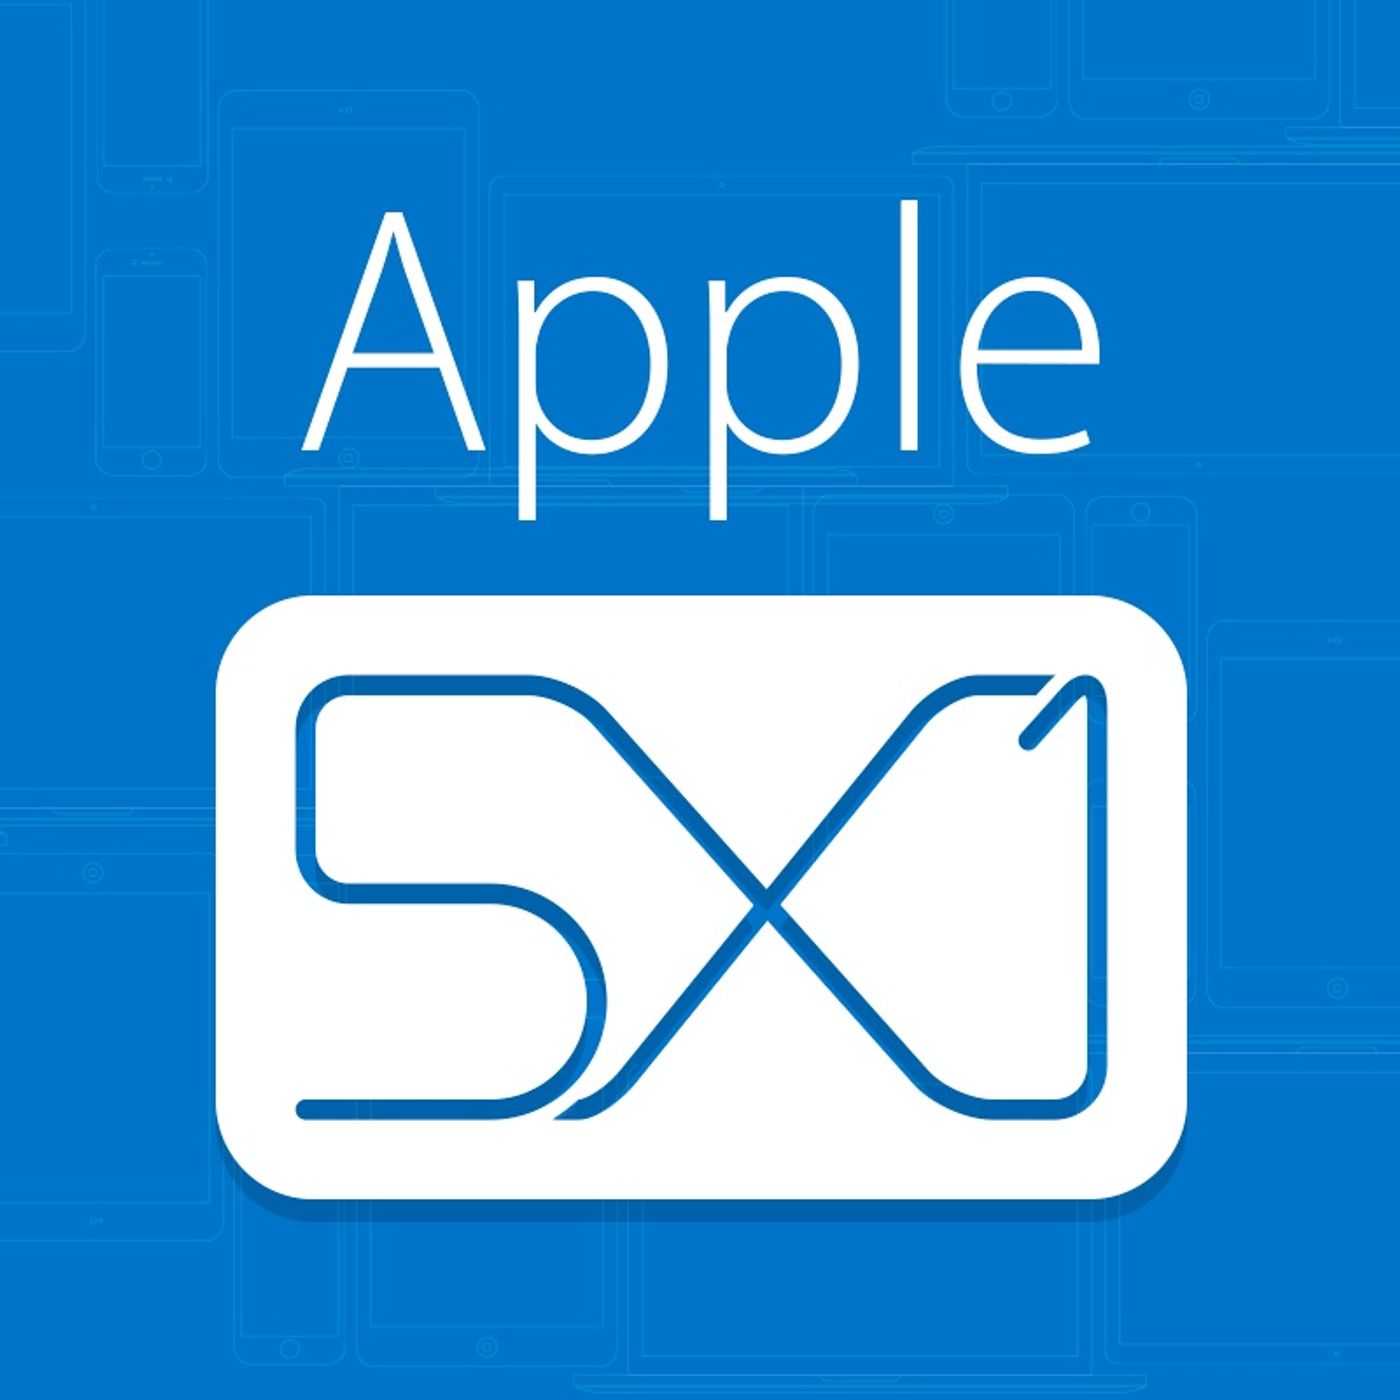 Apple 5x1